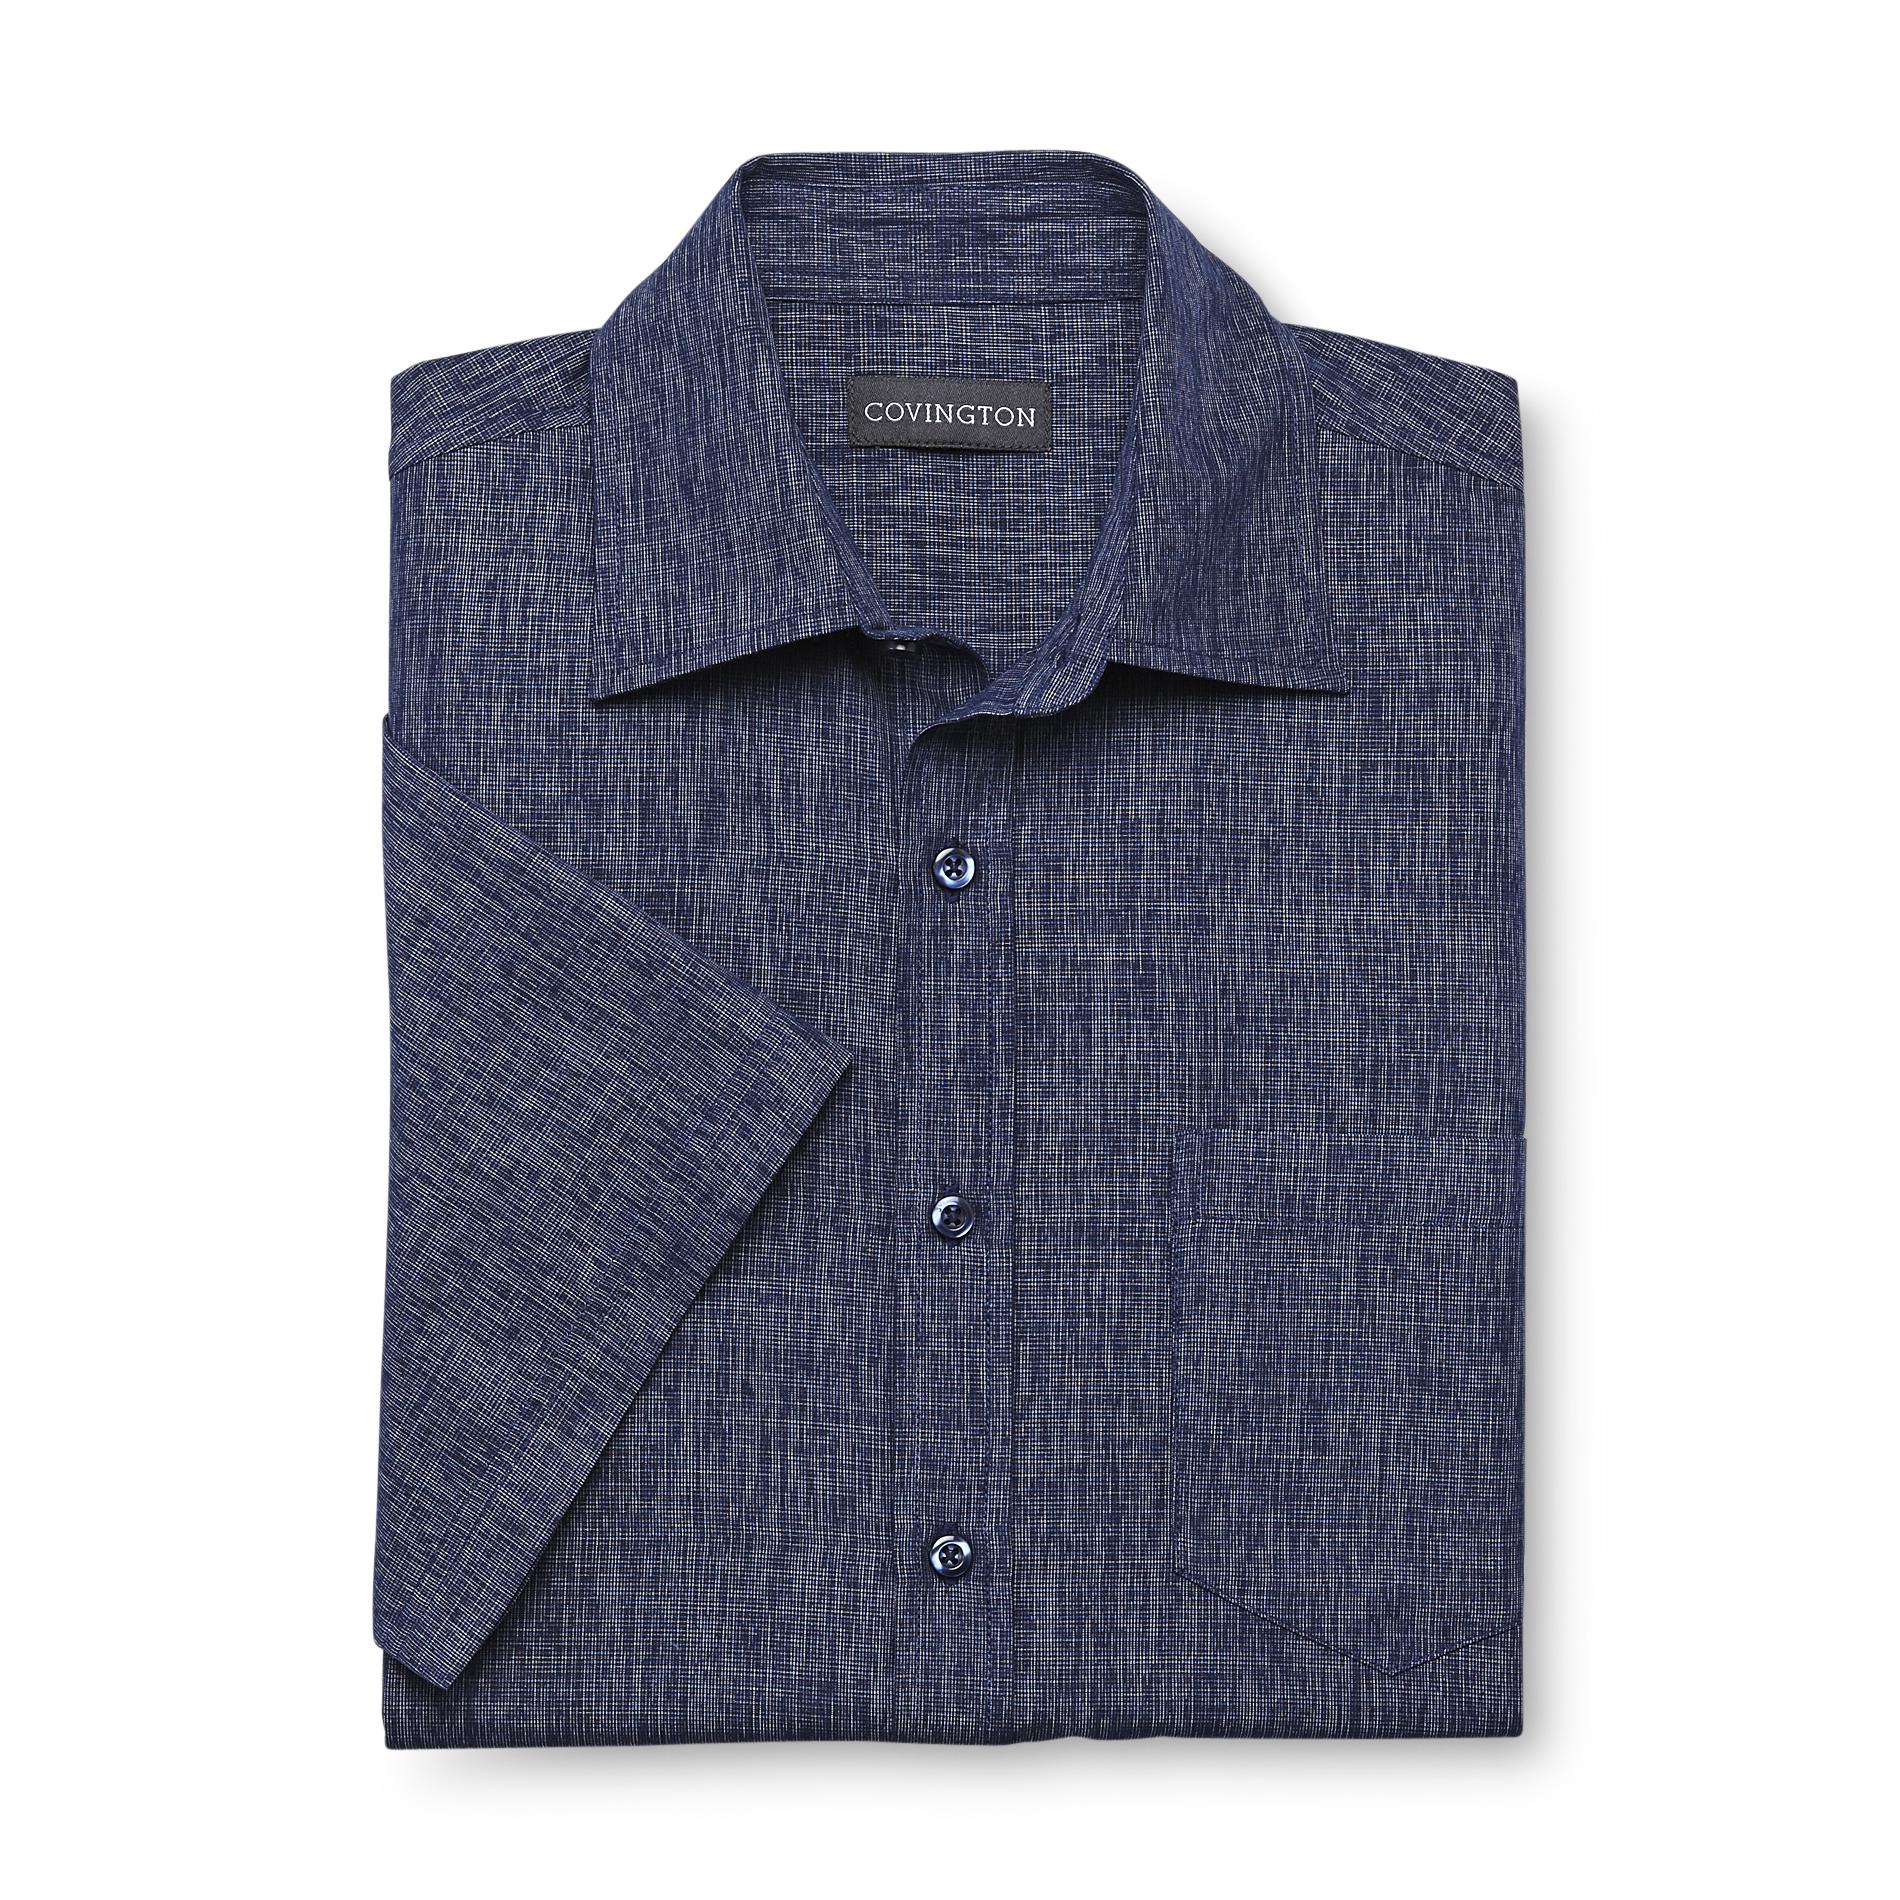 Covington Men's Short-Sleeve Woven Shirt - Space-Dyed